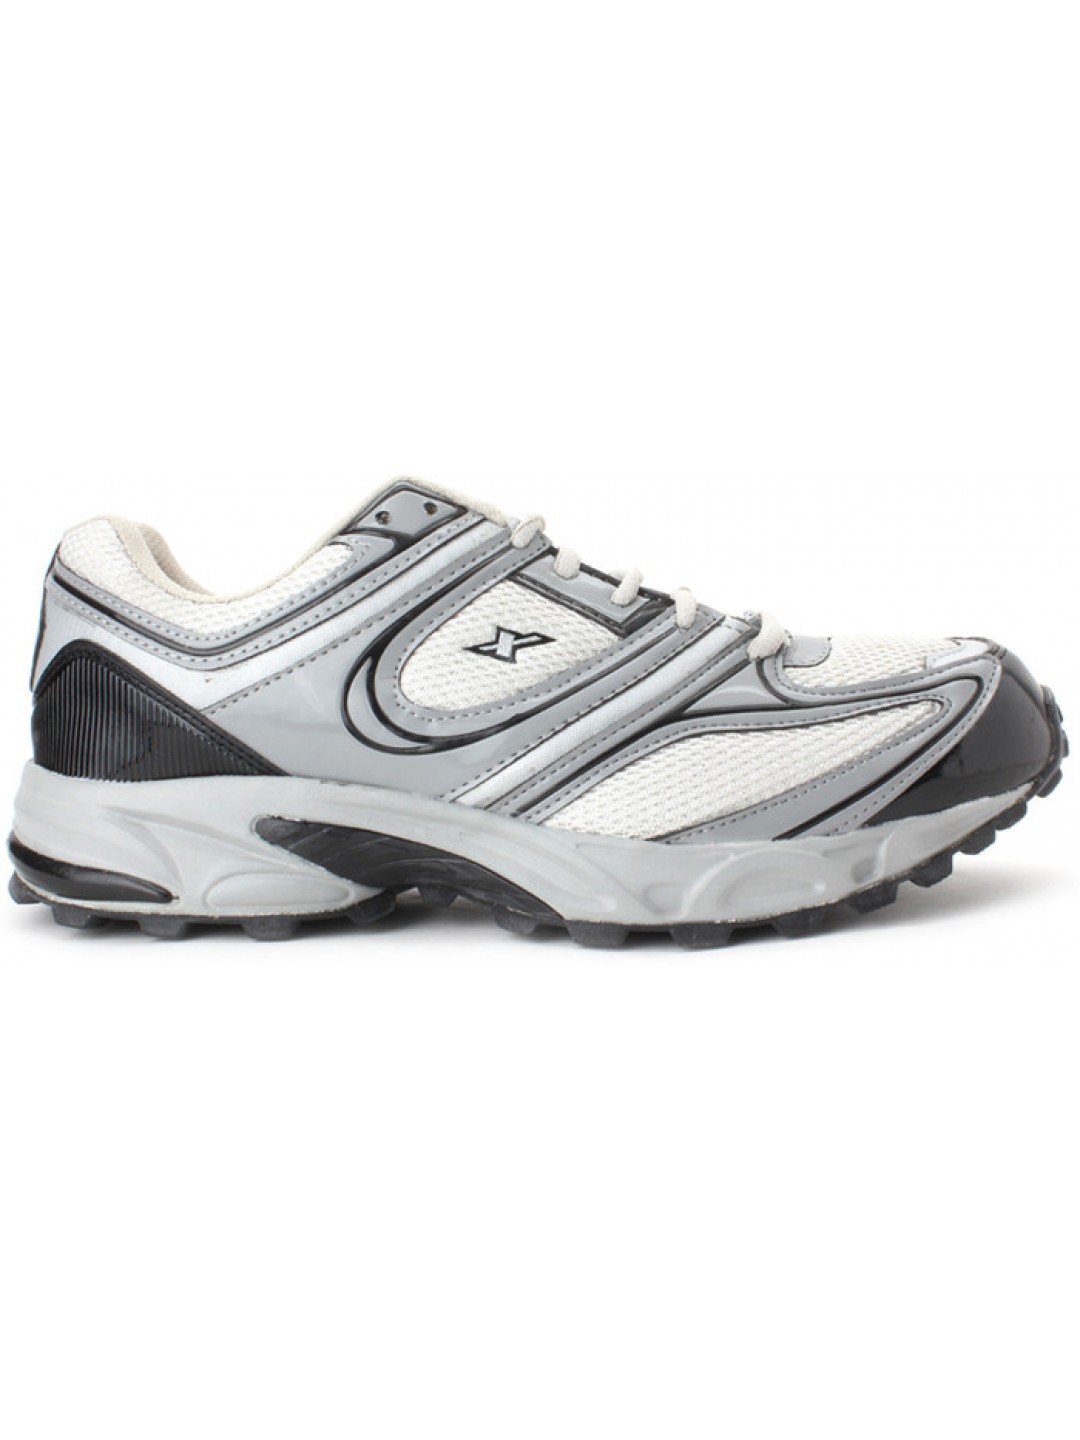 SPARX Grey & Silver Running Shoes SM118-LG-SL